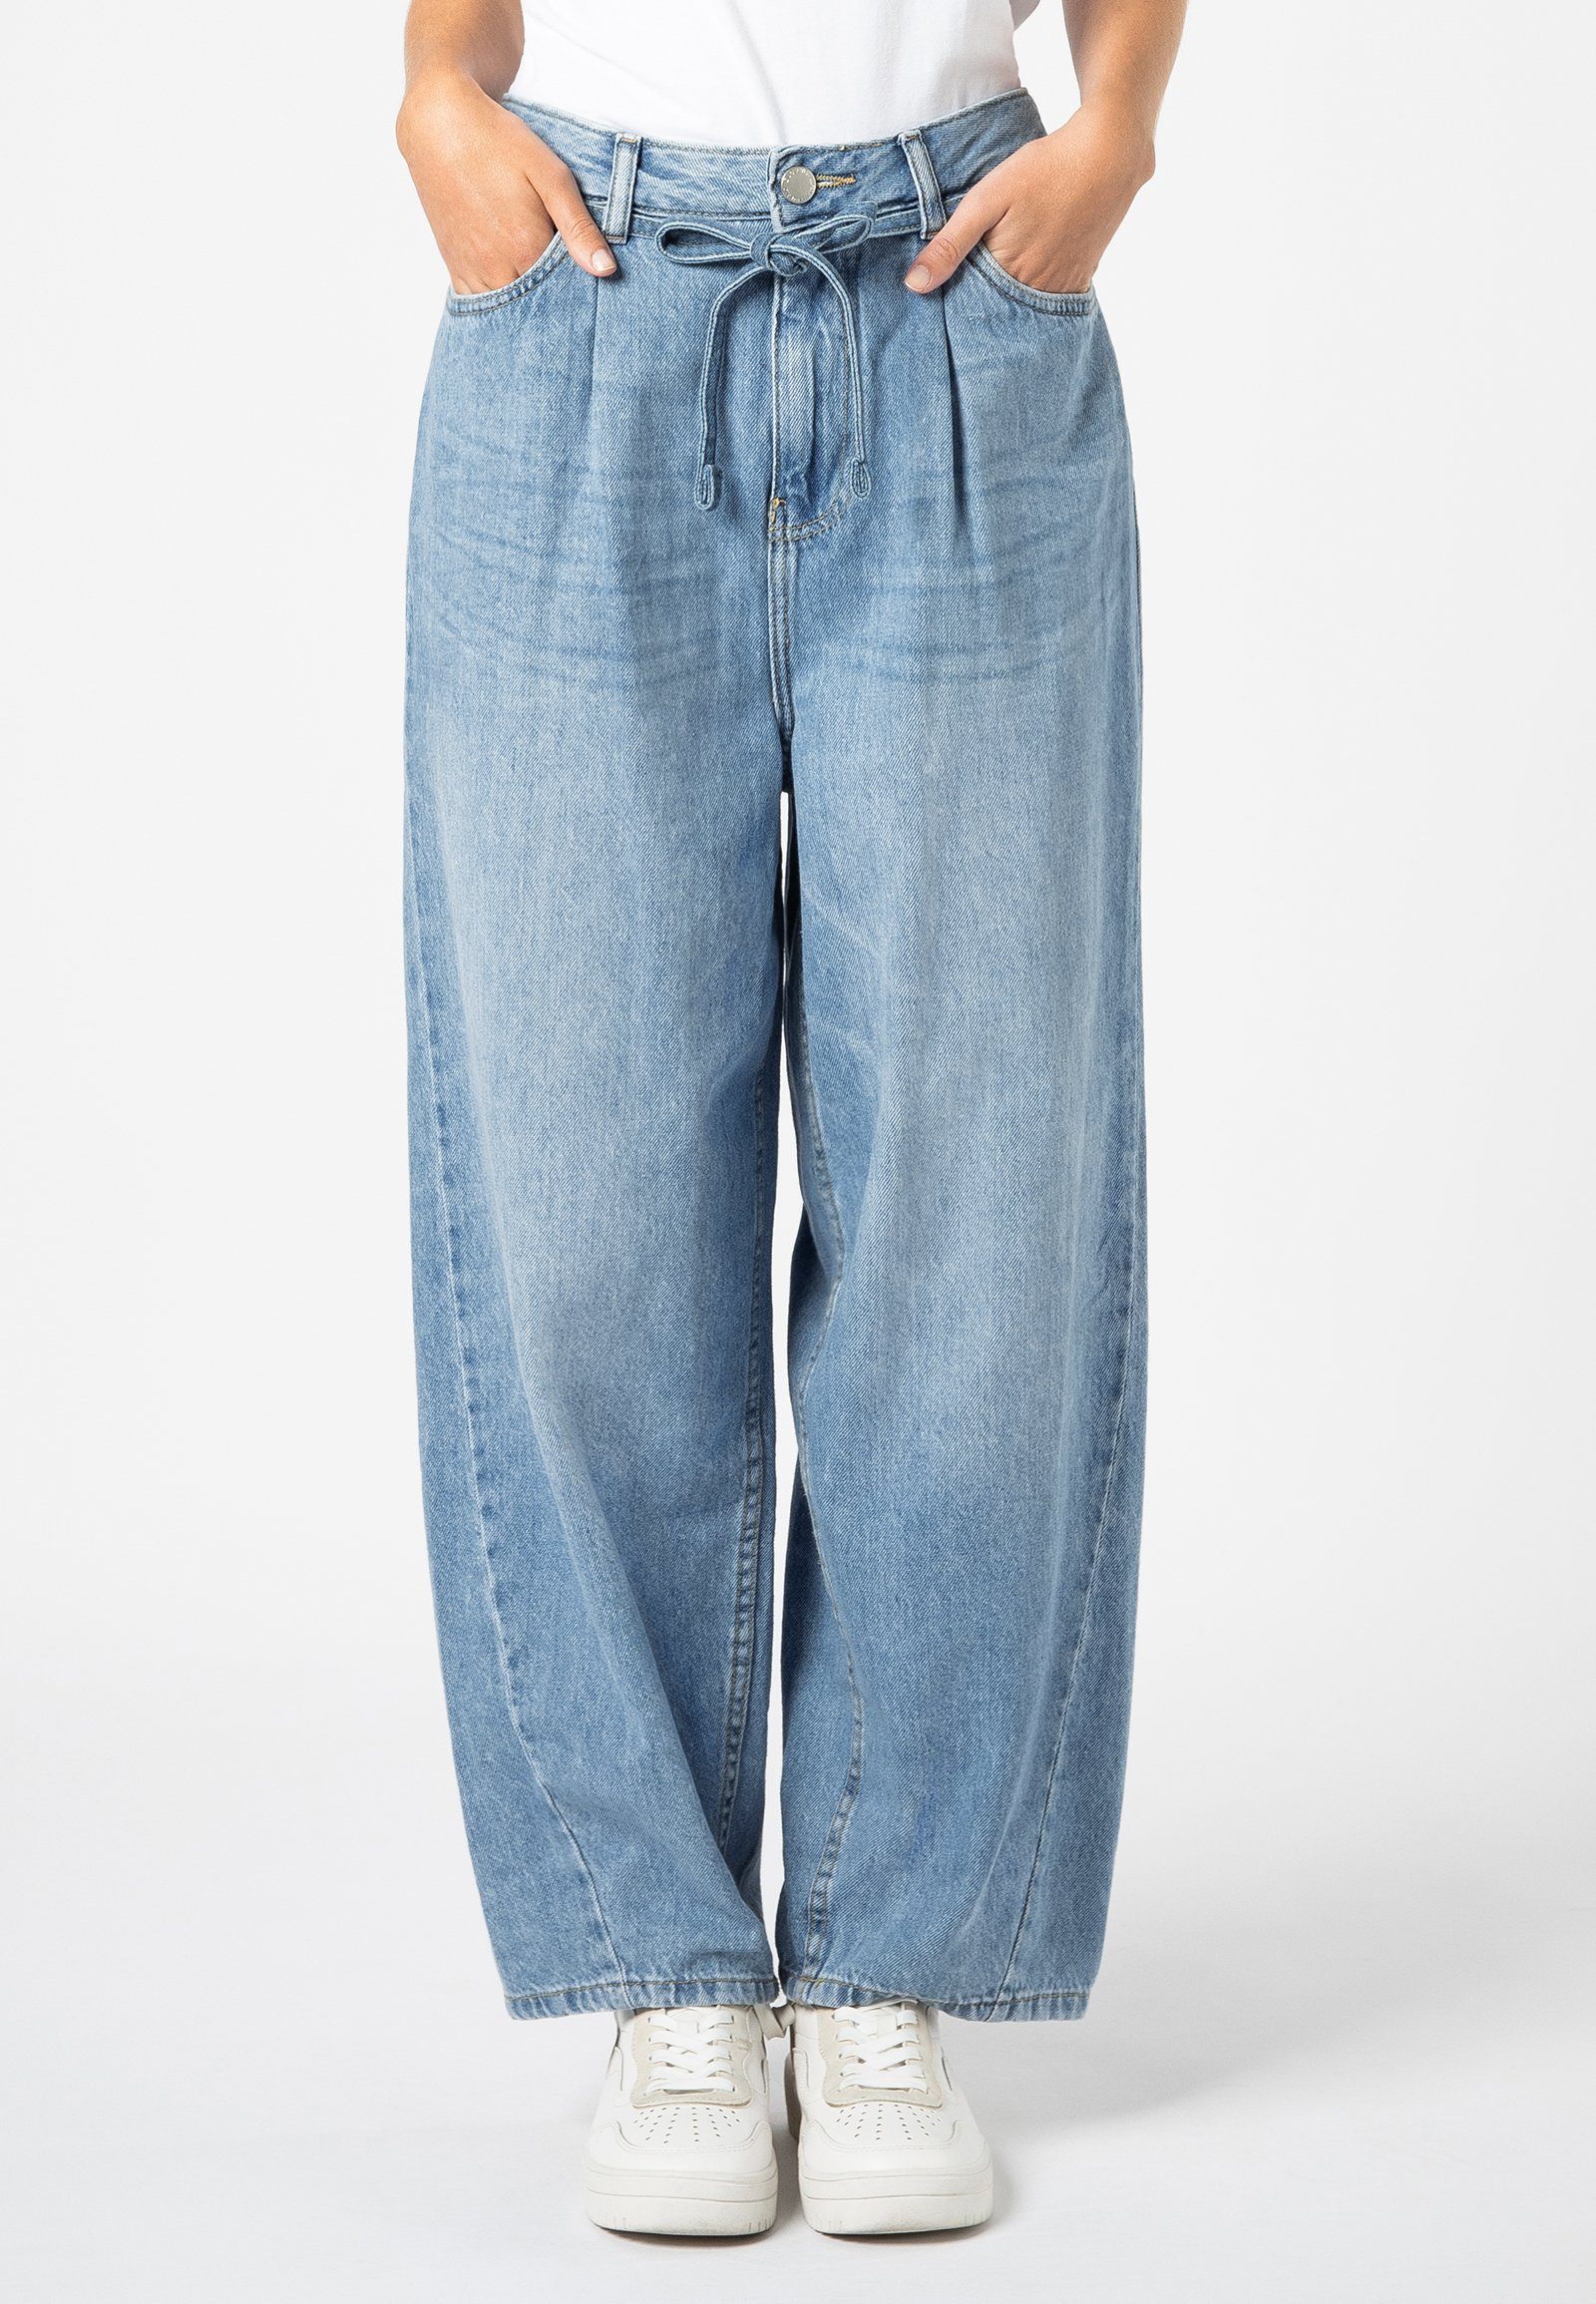 SUBLEVEL Eight2Nine light-blue Barrel-Fit Jeans Loose-fit-Jeans